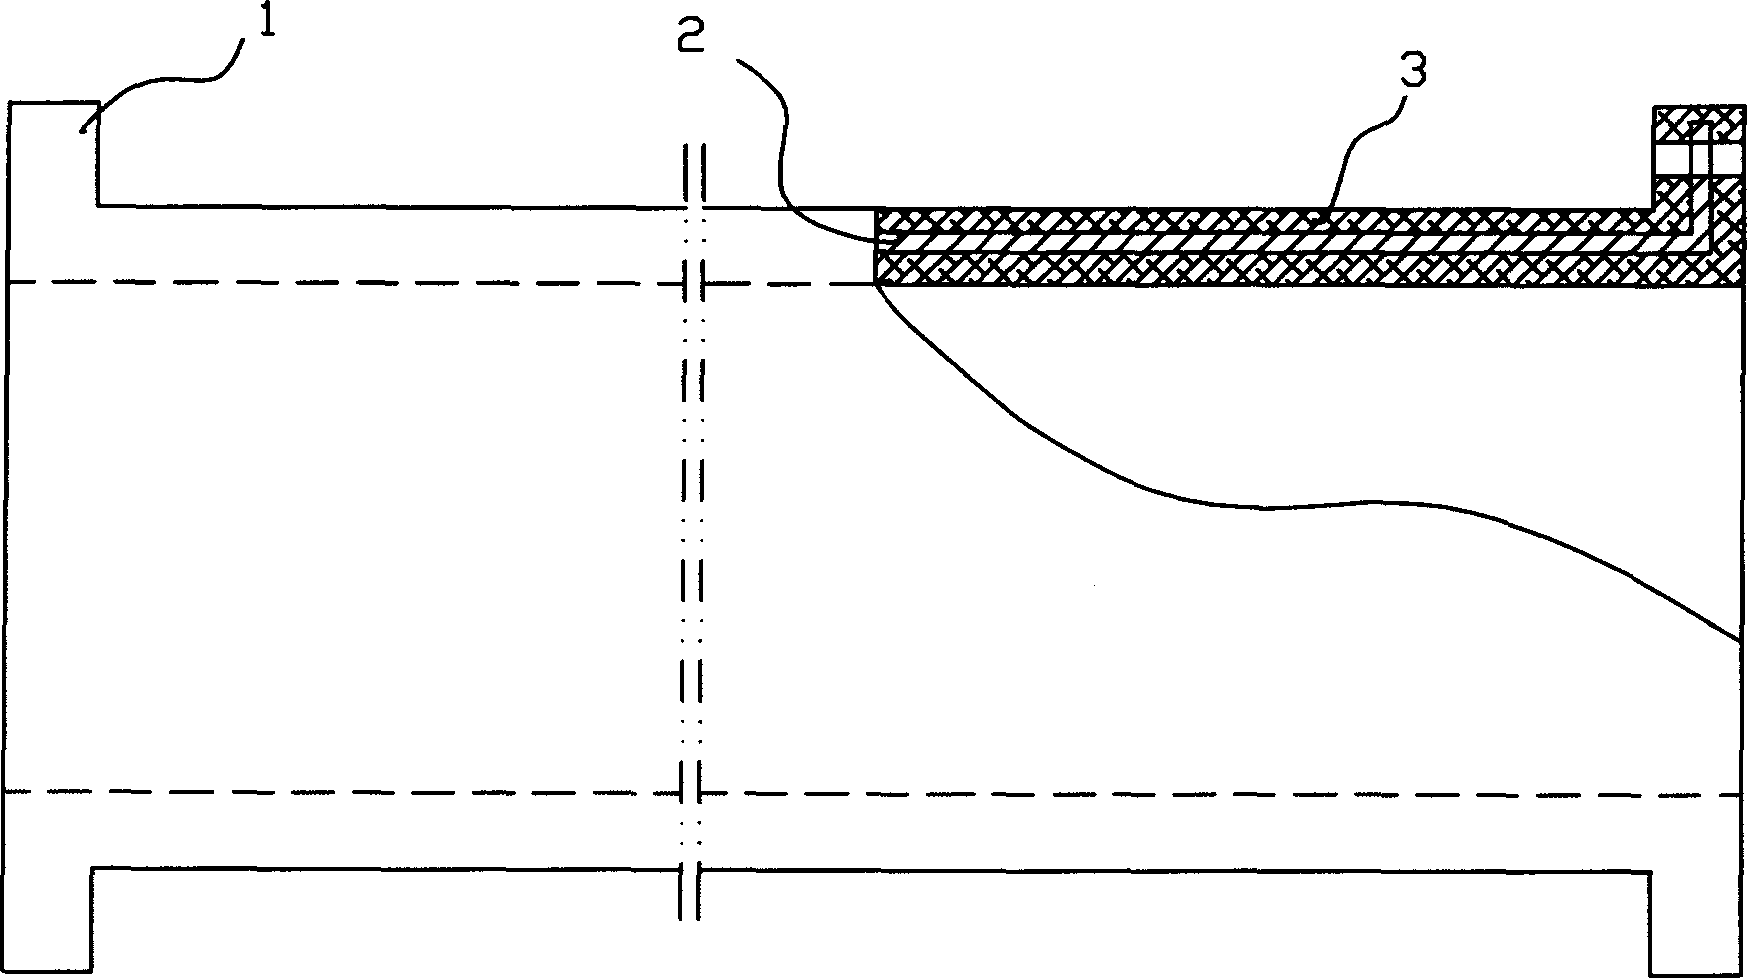 Large diameter steel-plastic pipe